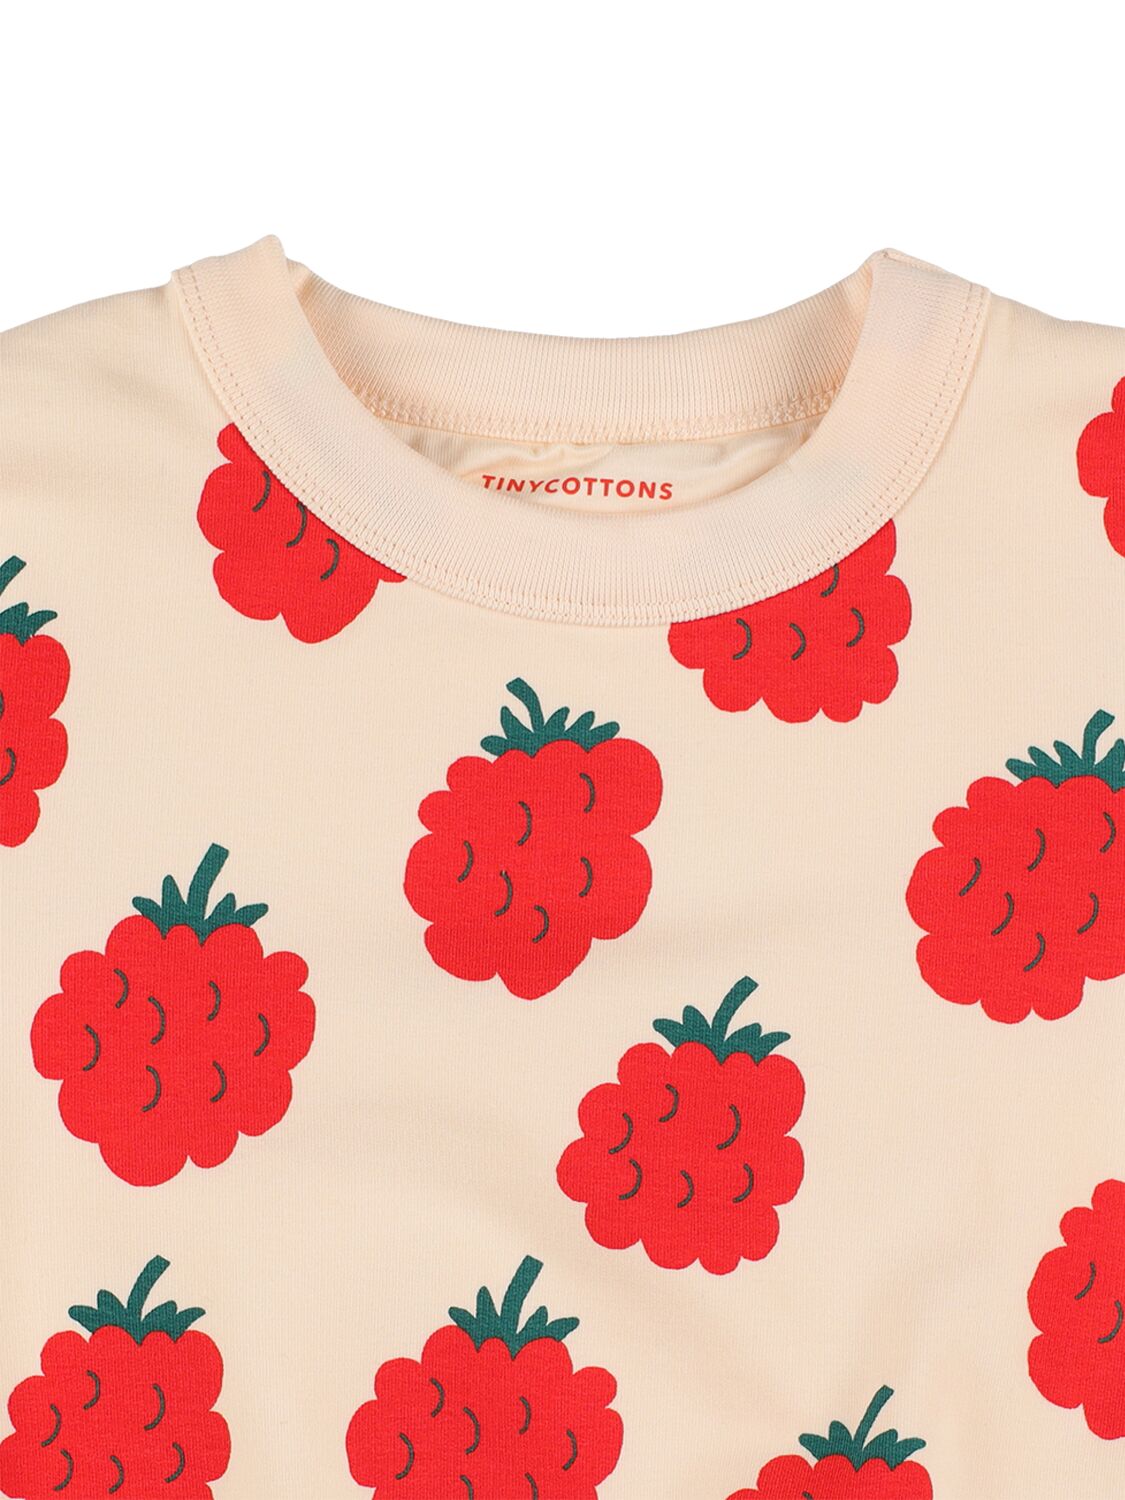 Tiny Cottons Kids' Raspberry Print Cotton Sweatshirt In White,red